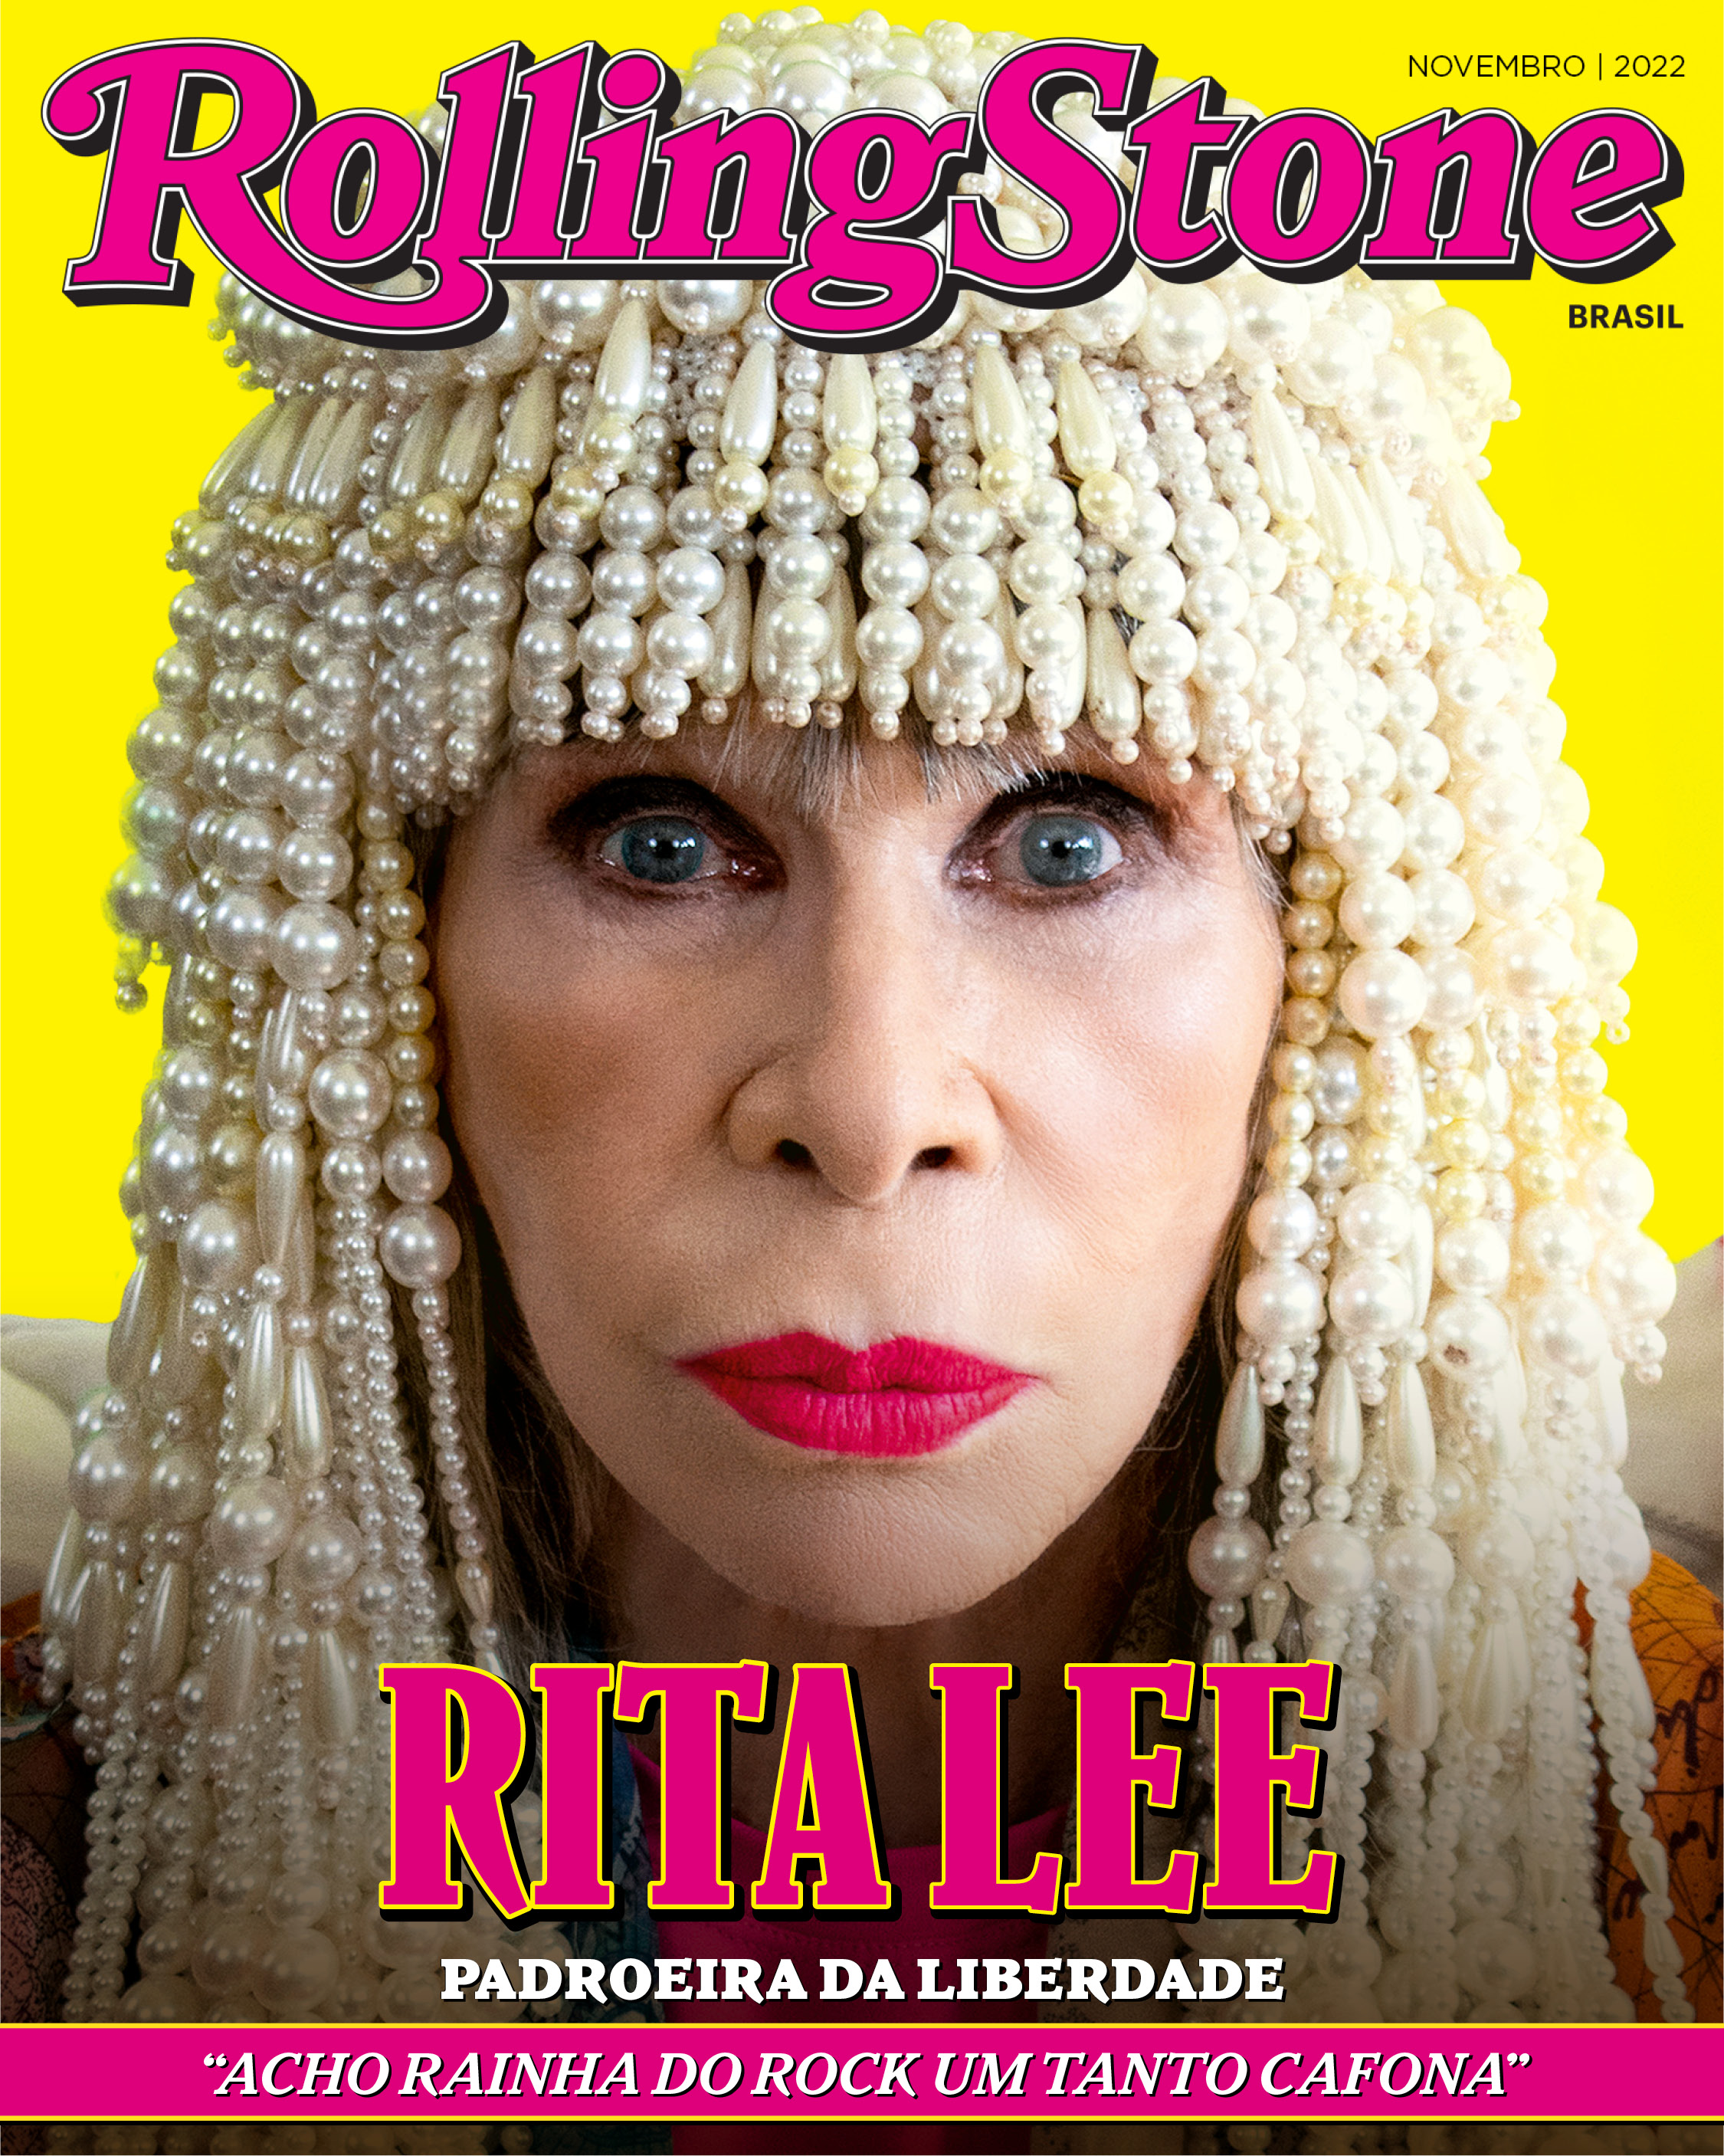 Rita Lee para a capa digital da Rolling Stone Brasil 